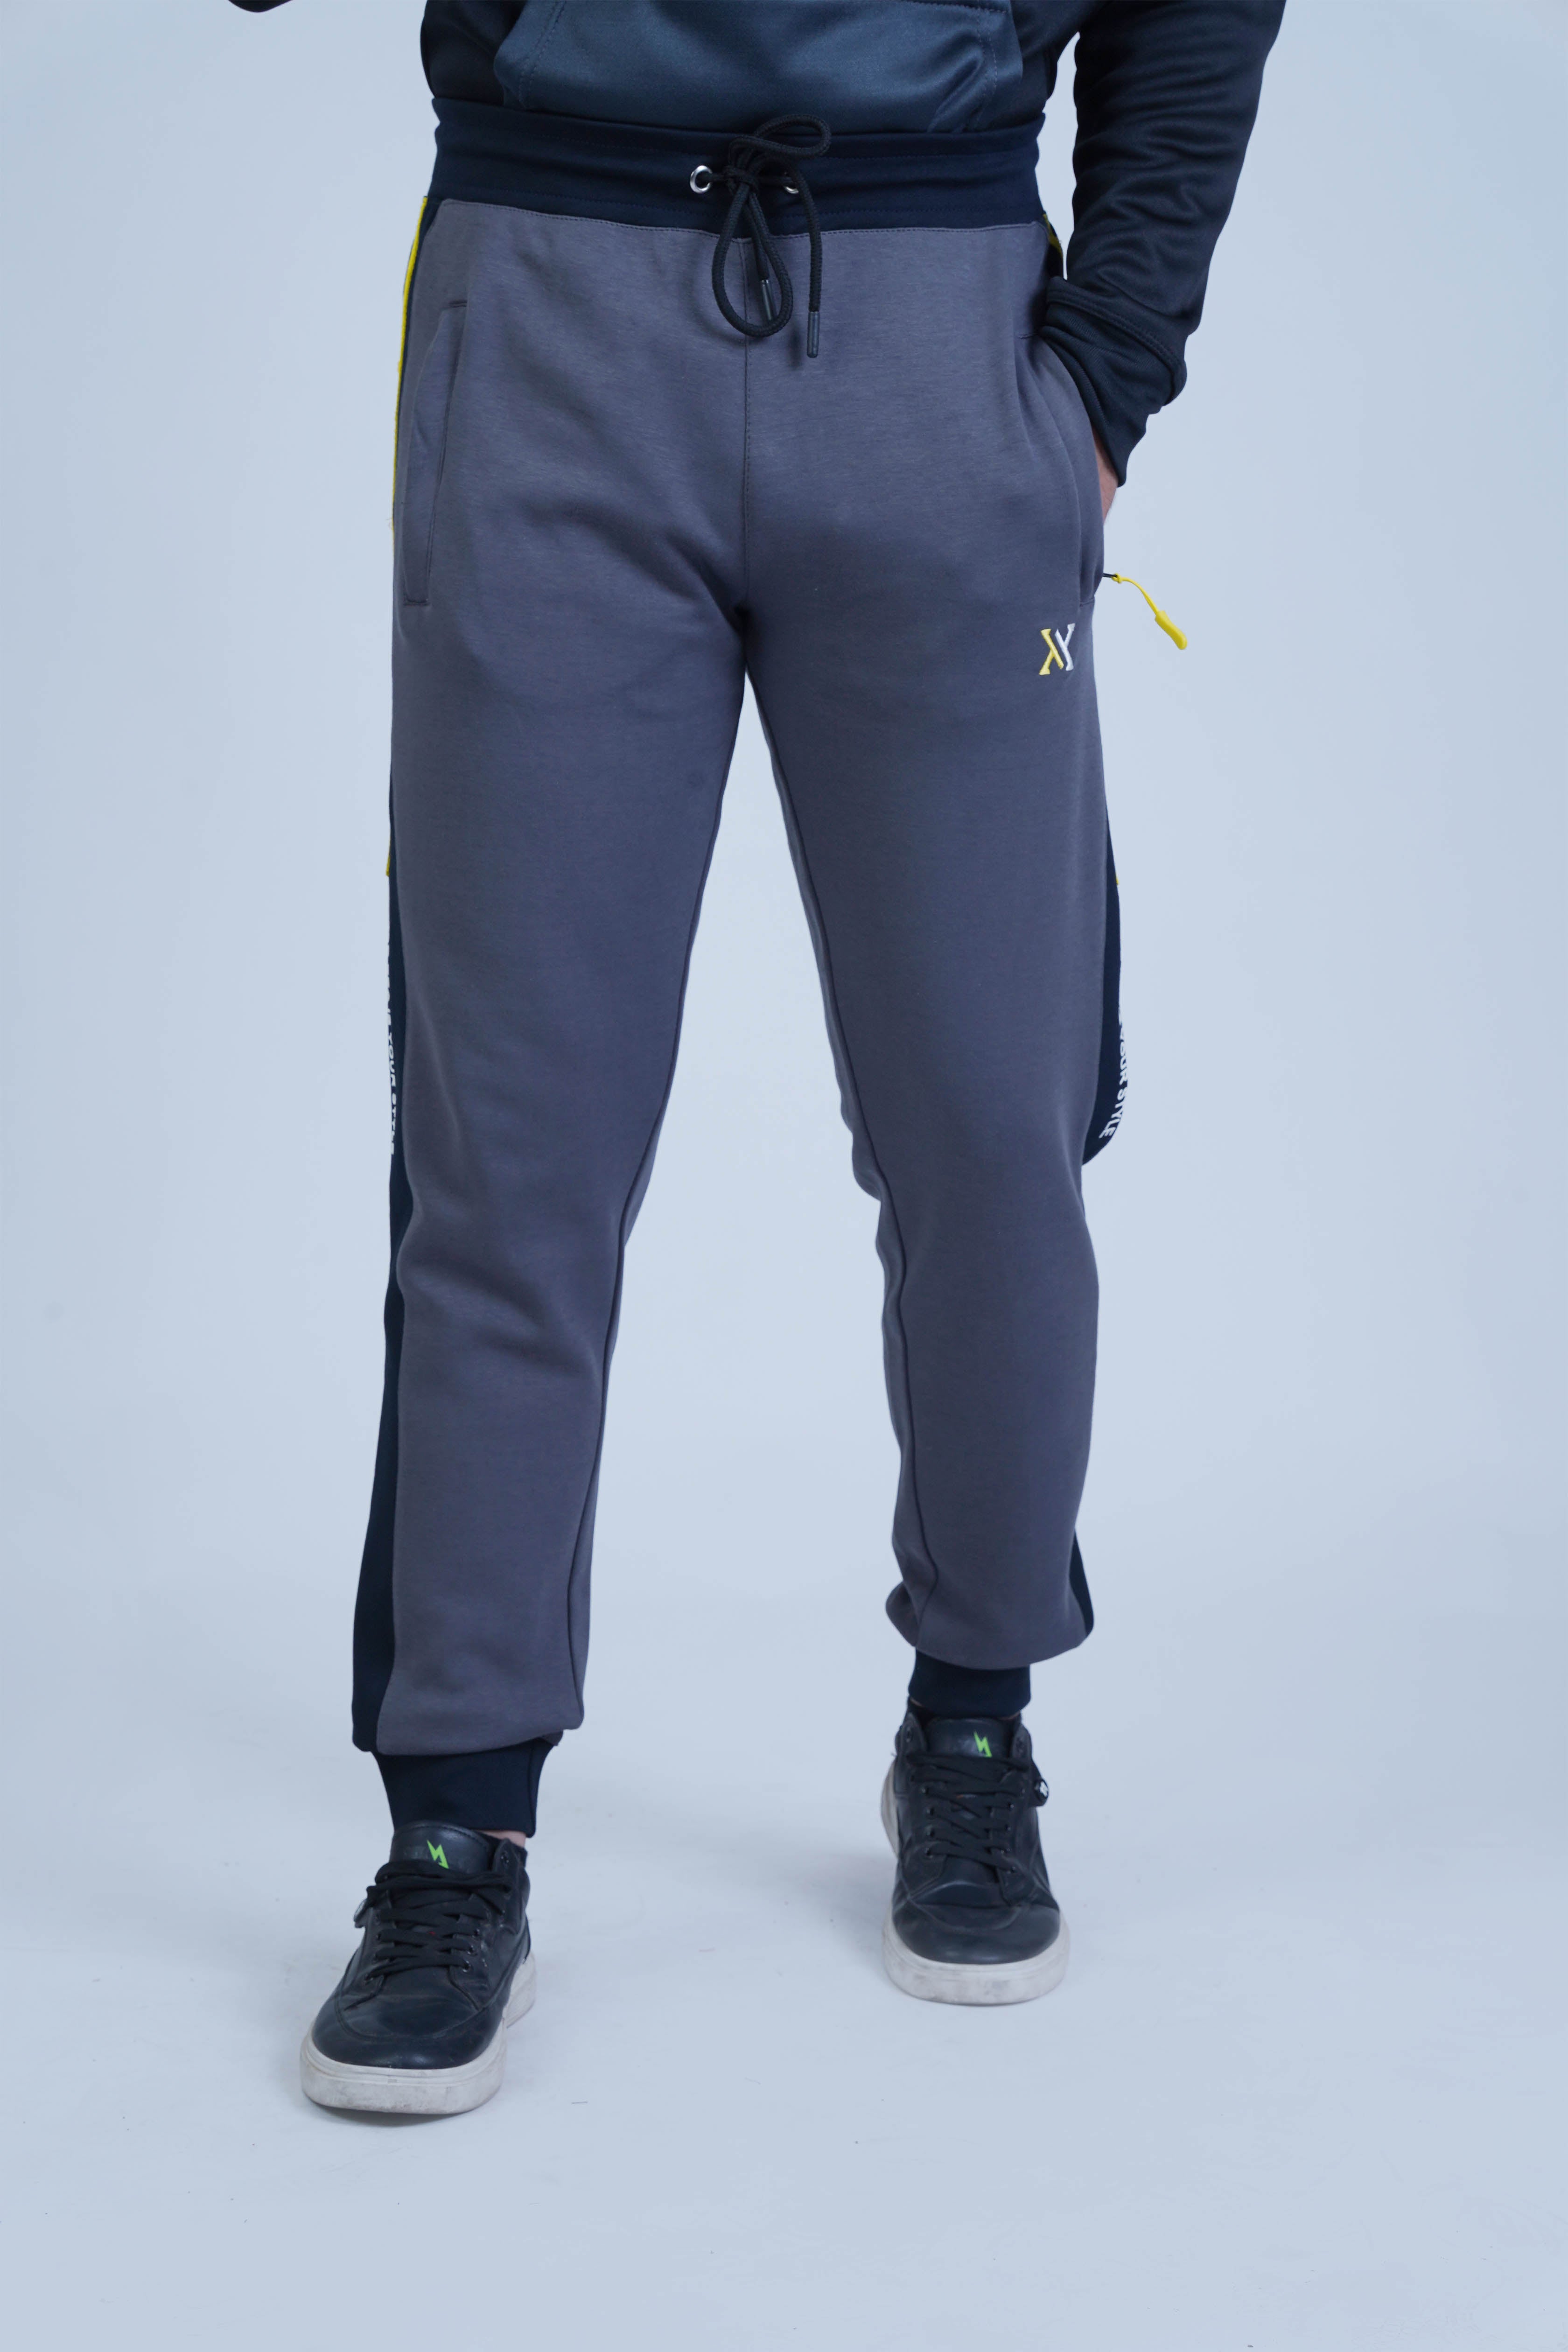 Uni Pro Smoke Grey Trouser - The Xea Men's Fashion Essential